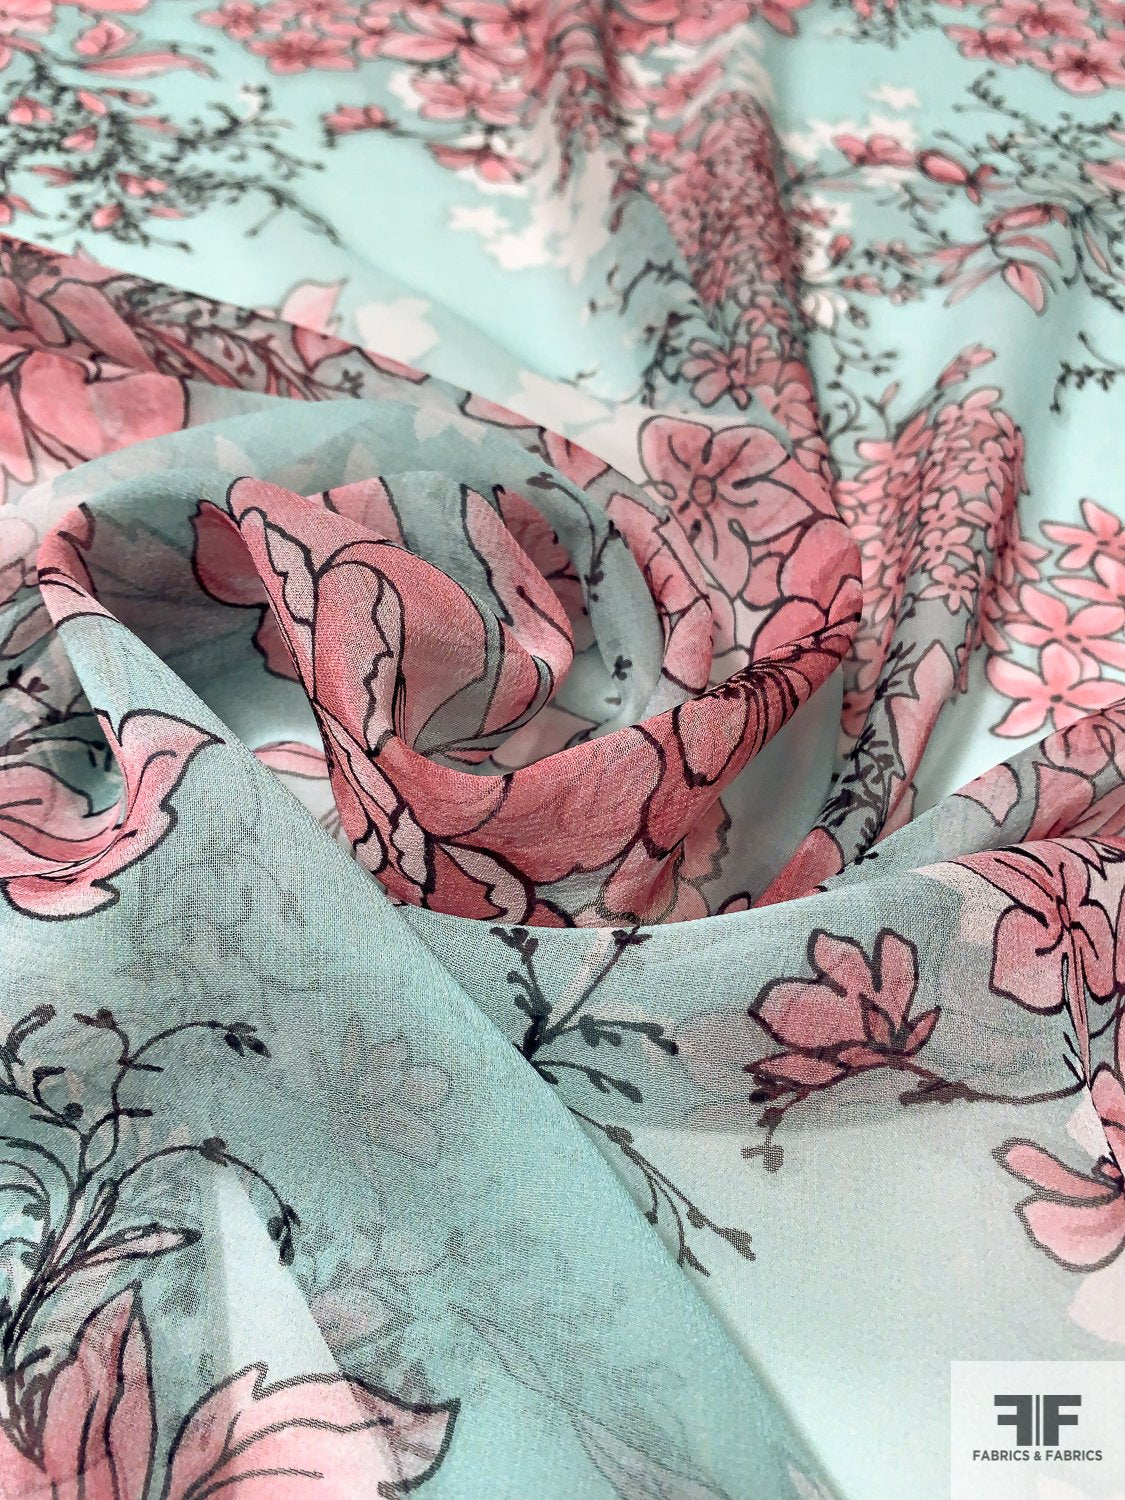 Dreamy Floral Printed Silk Chiffon - Rose Pink / Seafoam / Black